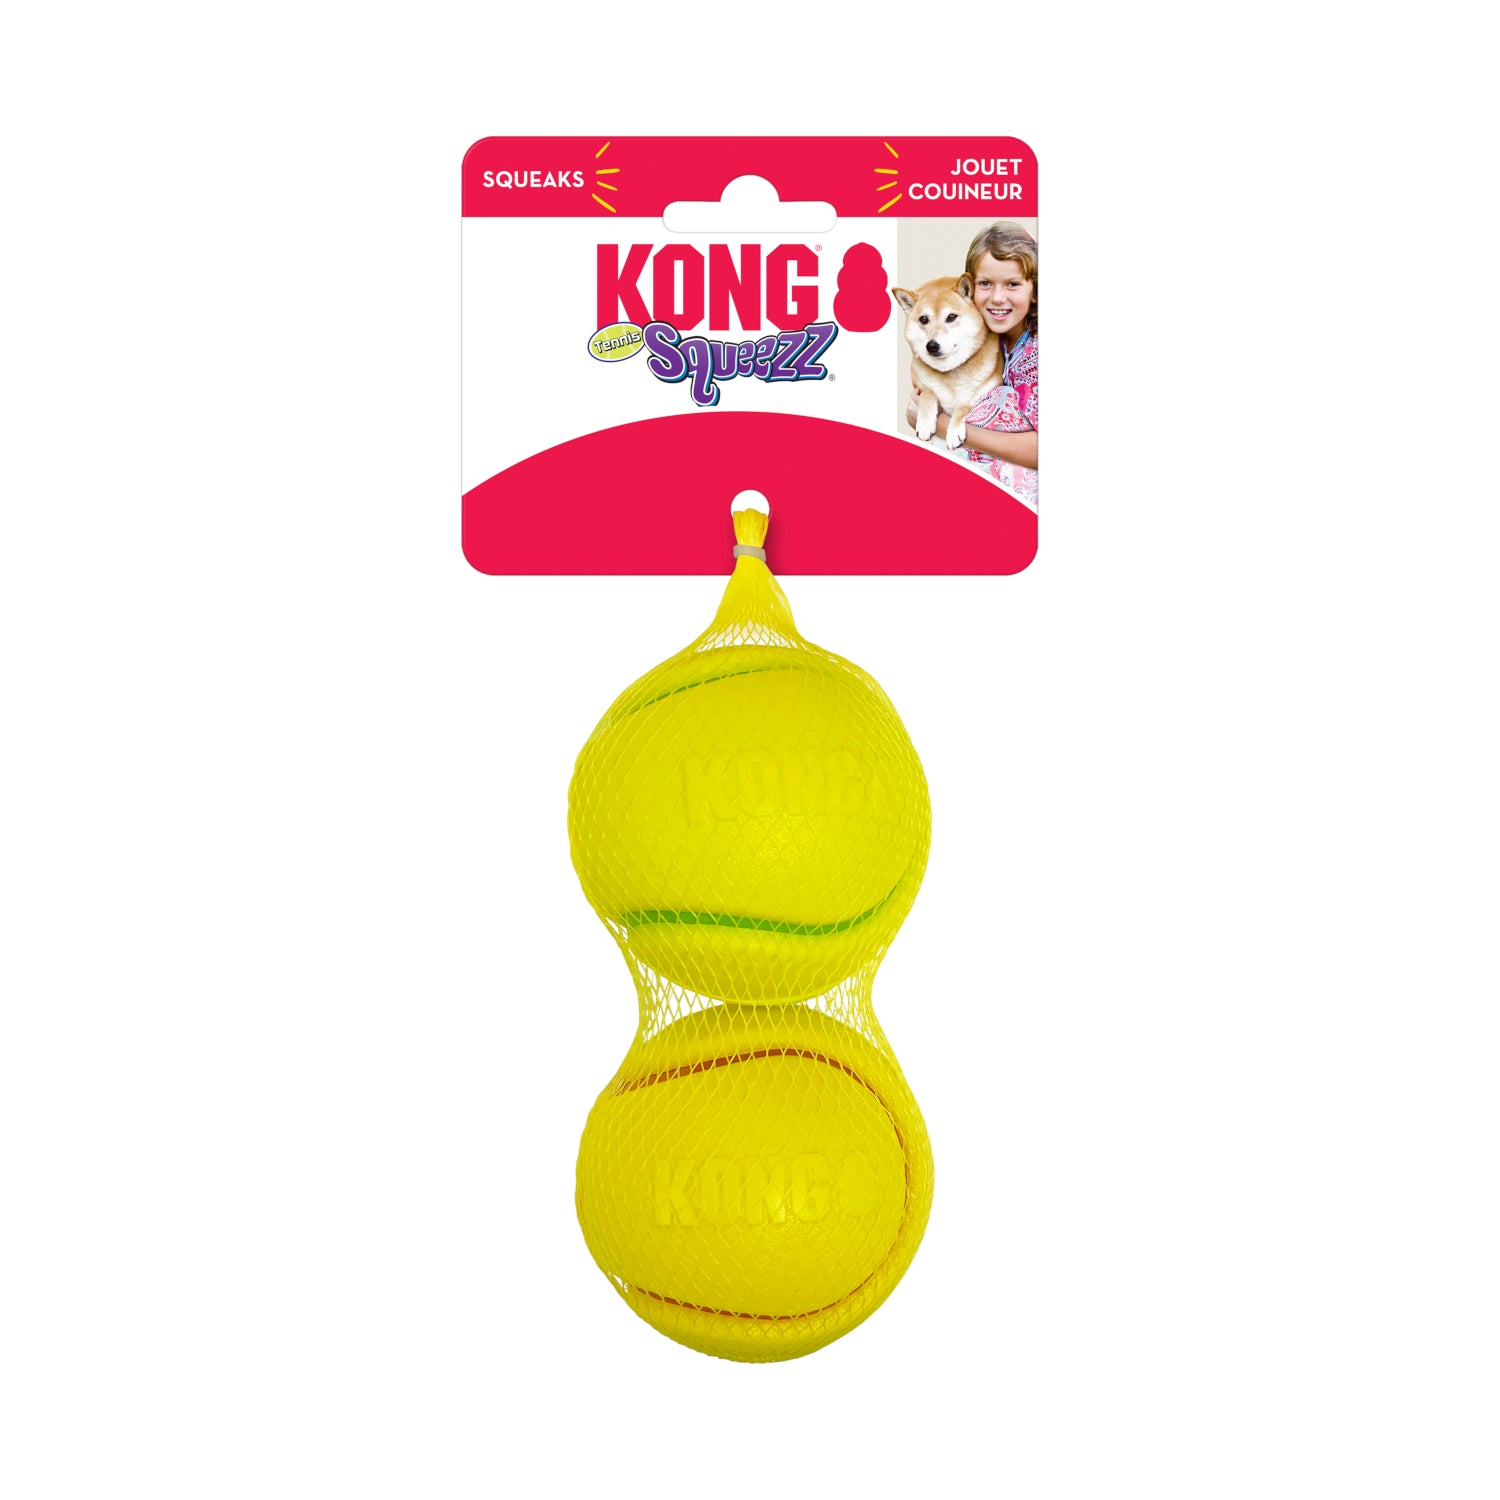 KONG Squeezz Tennis